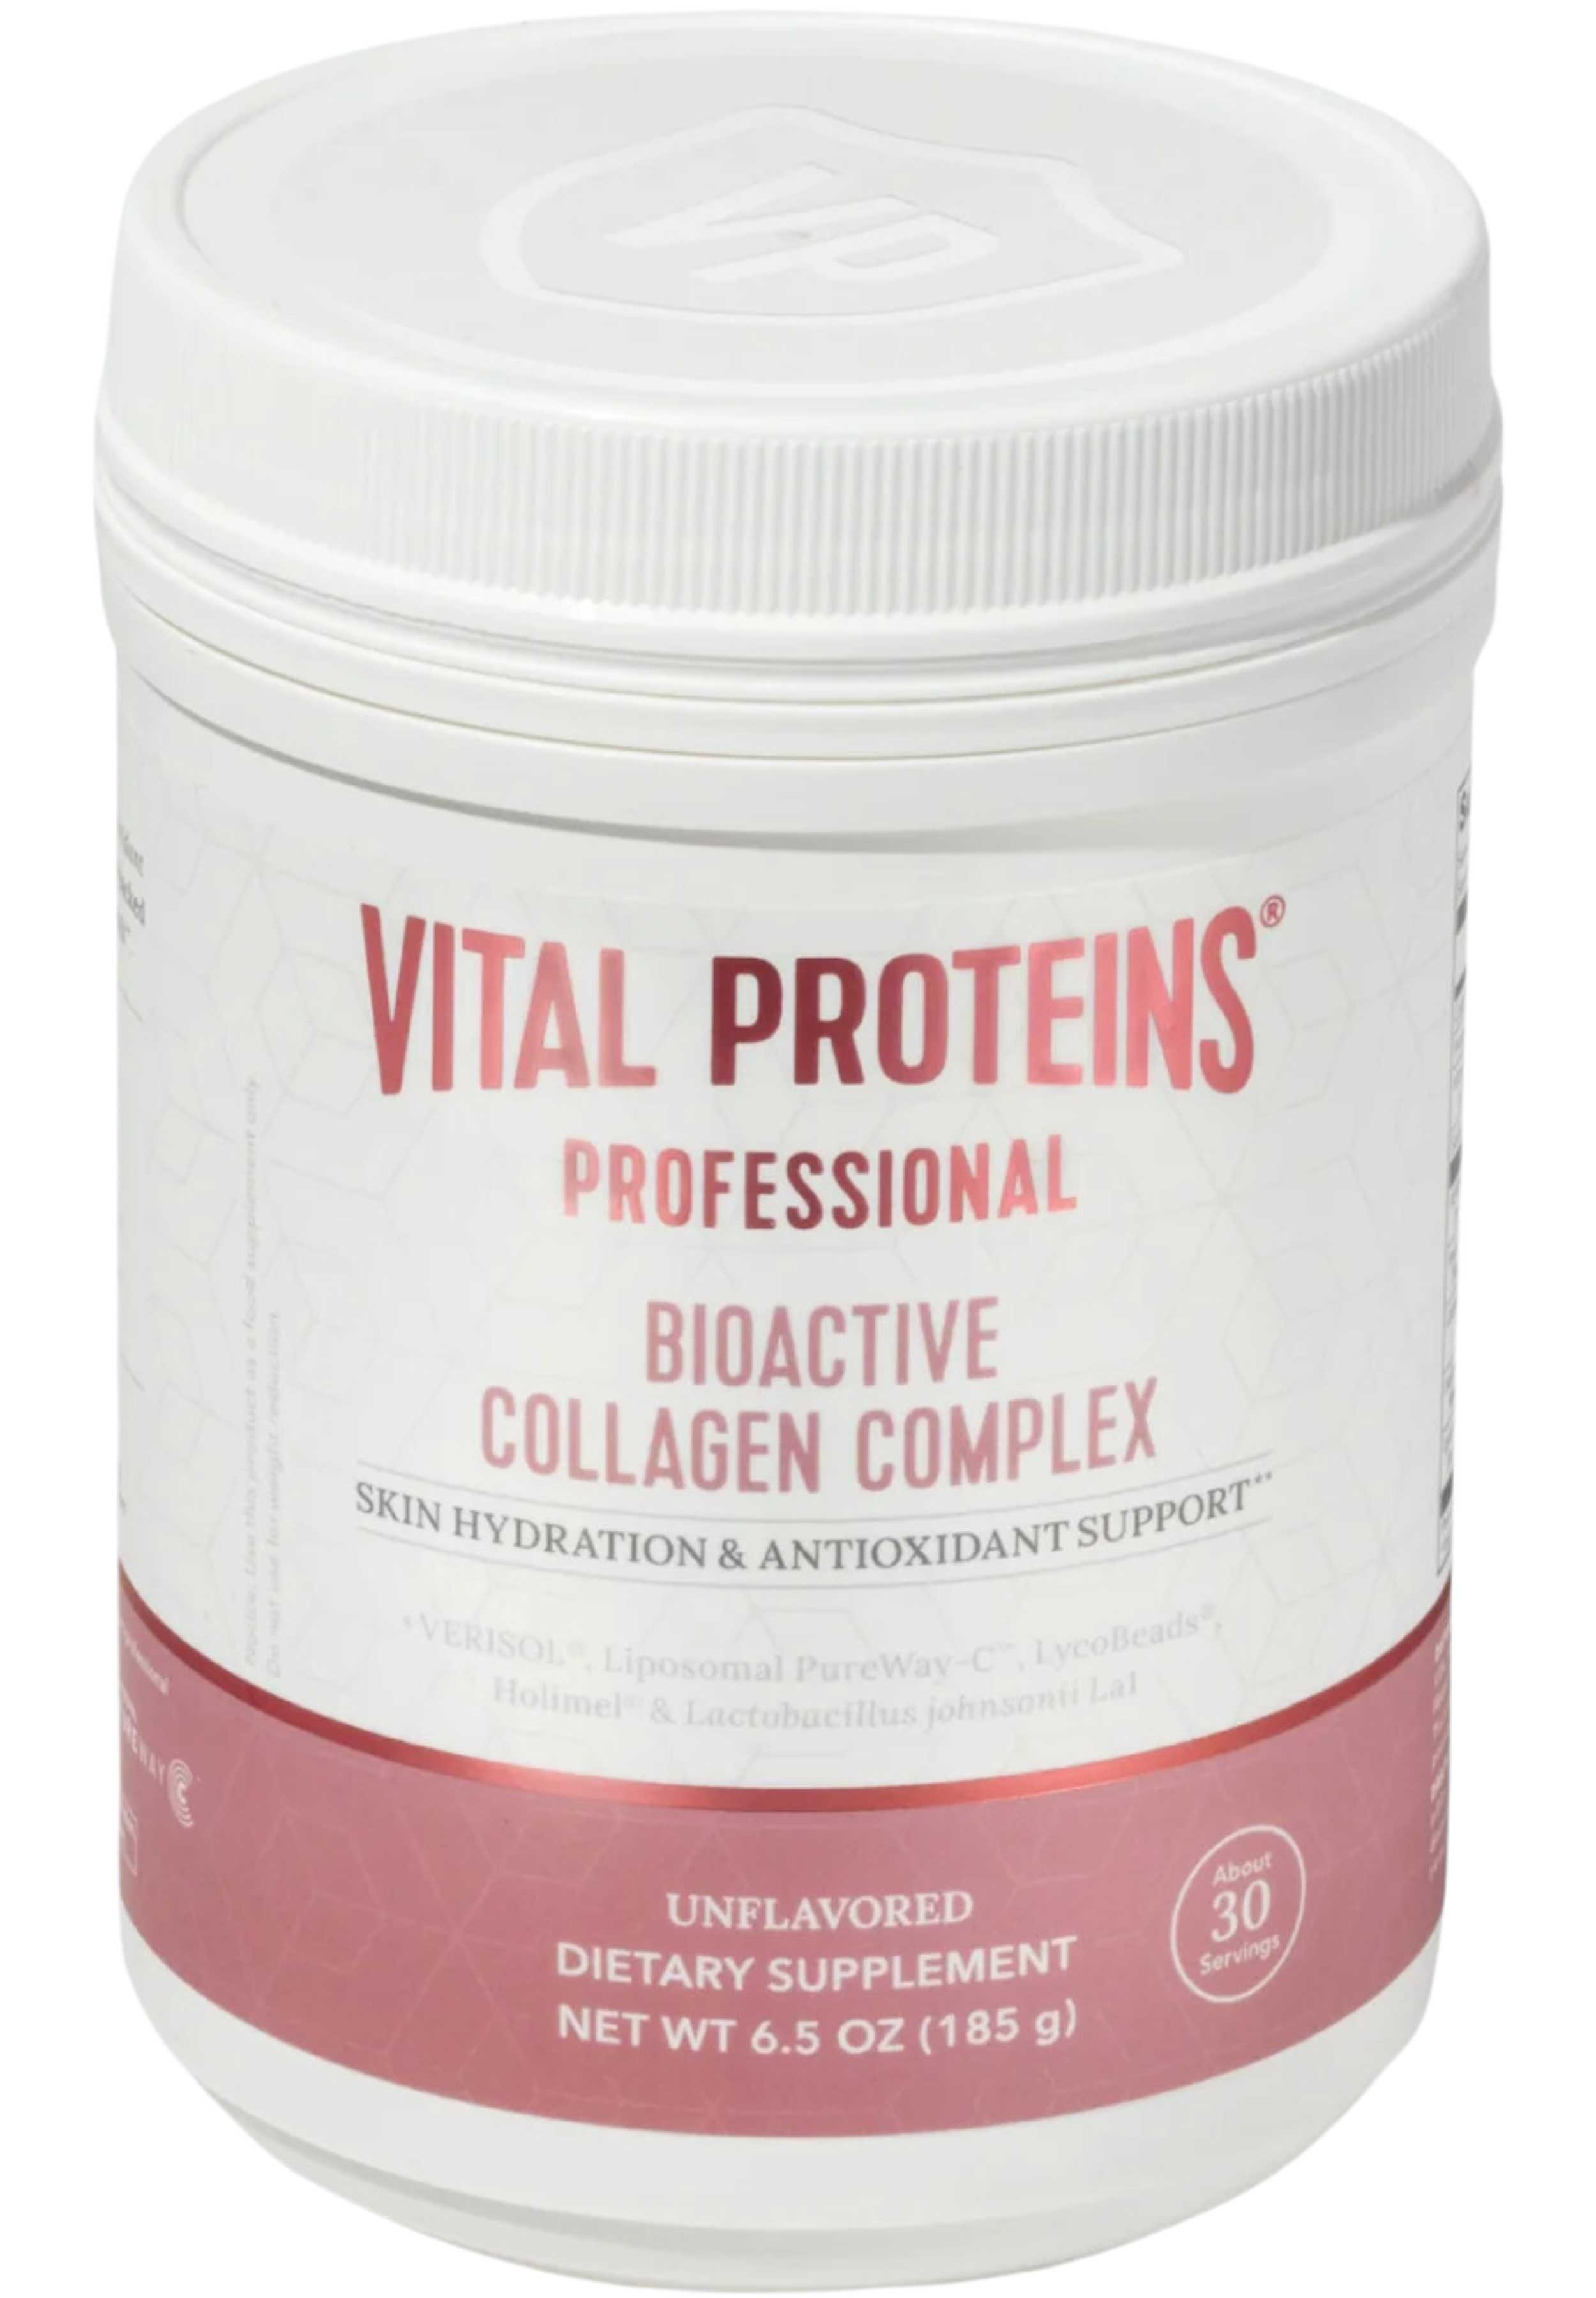 Vital Proteins Bioactive Collagen Complex Skin Hydration & Antioxidant Support